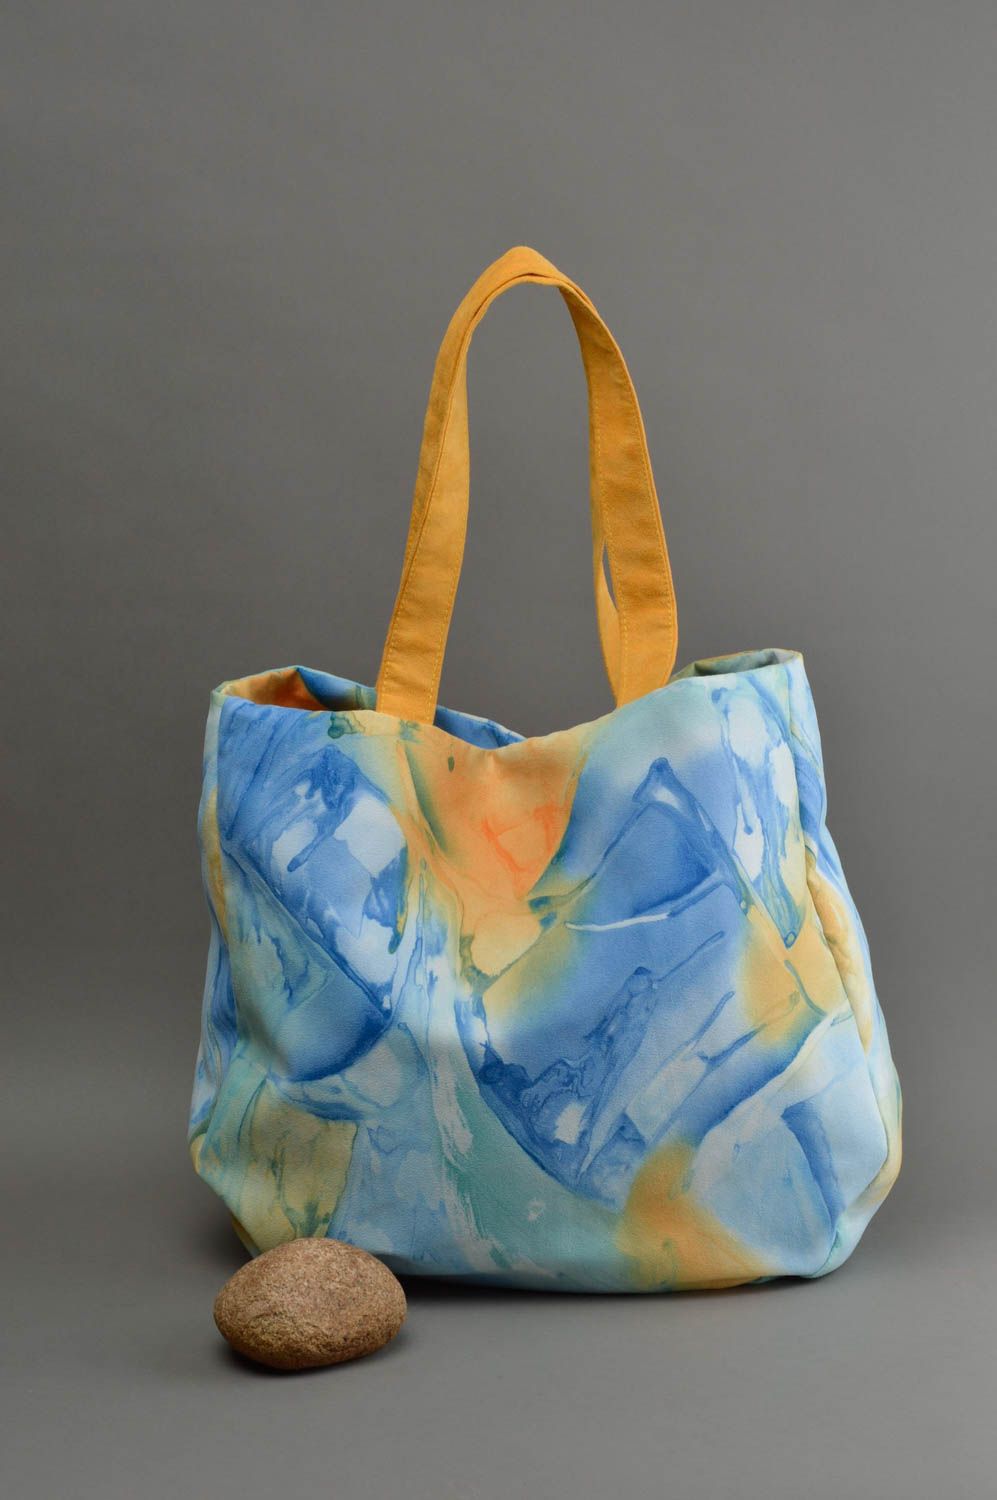 Grand sac à main en daim artificiel fait main bleu-orange fermoir aimanté photo 1